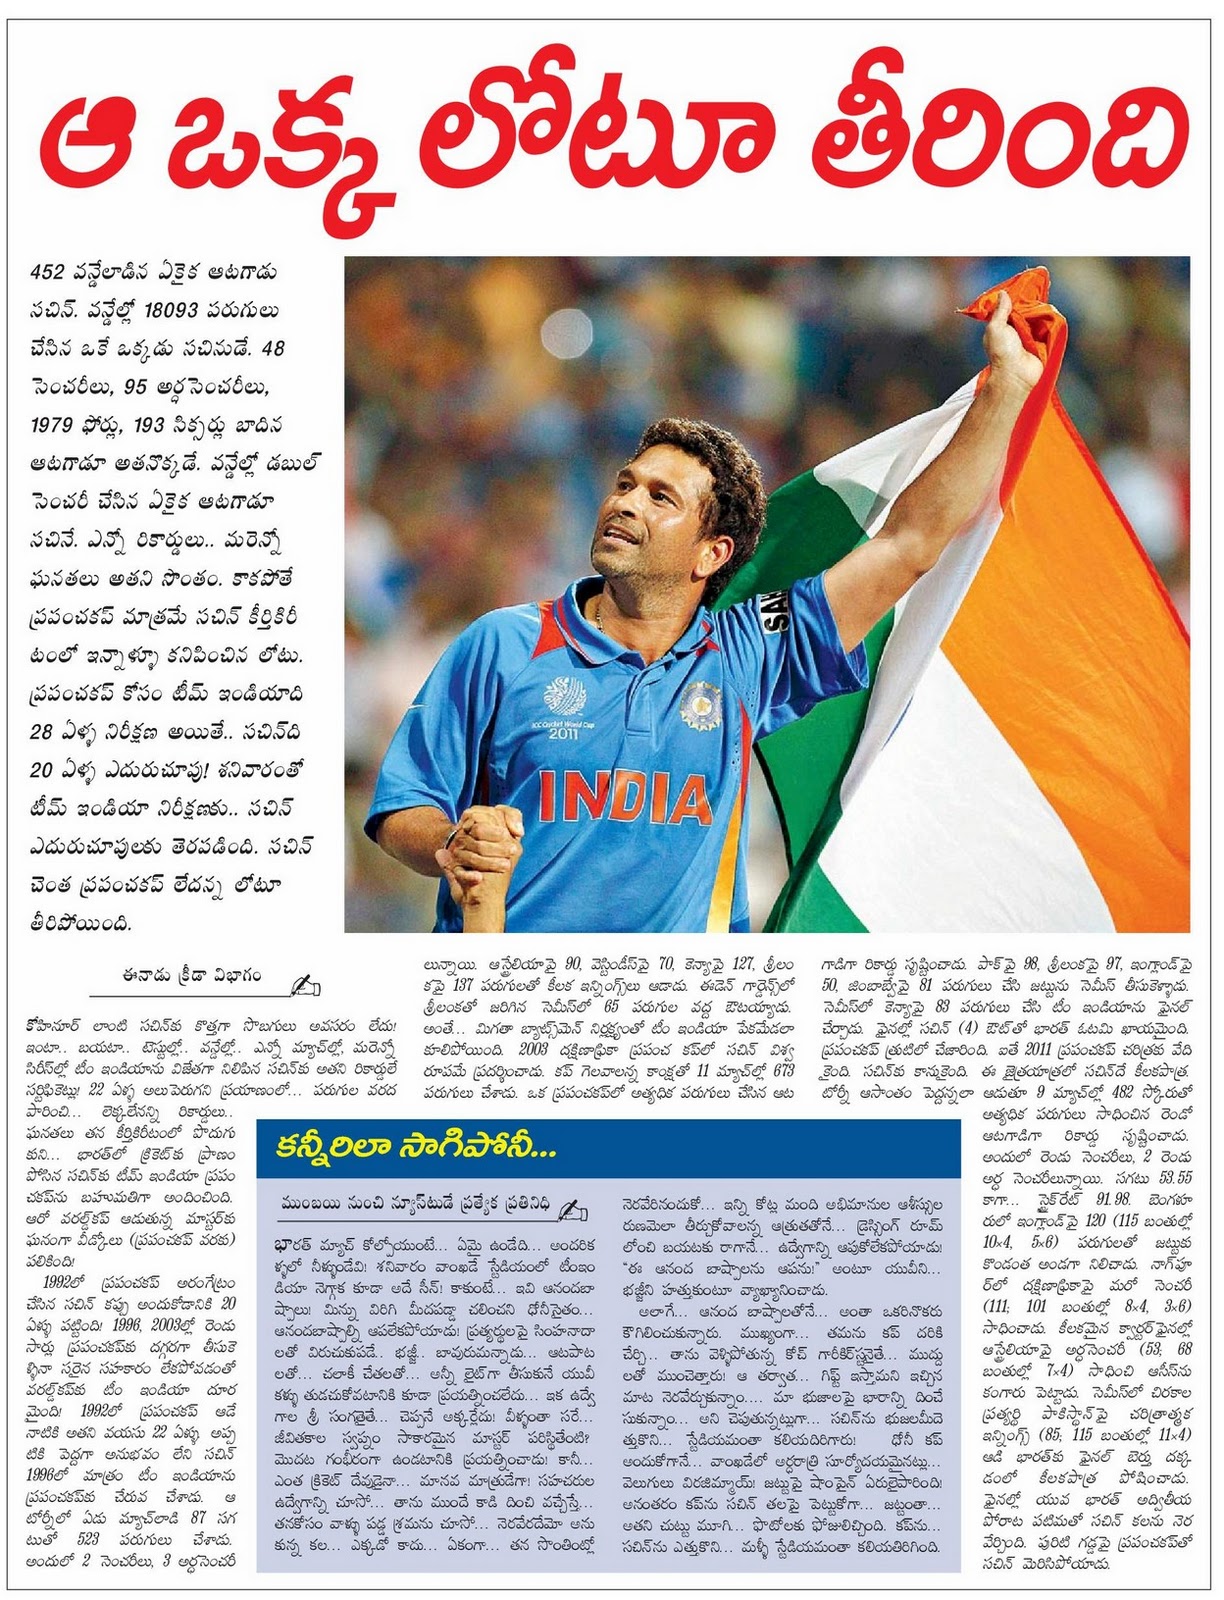 CWC 2011 Team India Paper Cuts From Eenadu | TECHNOBYTES